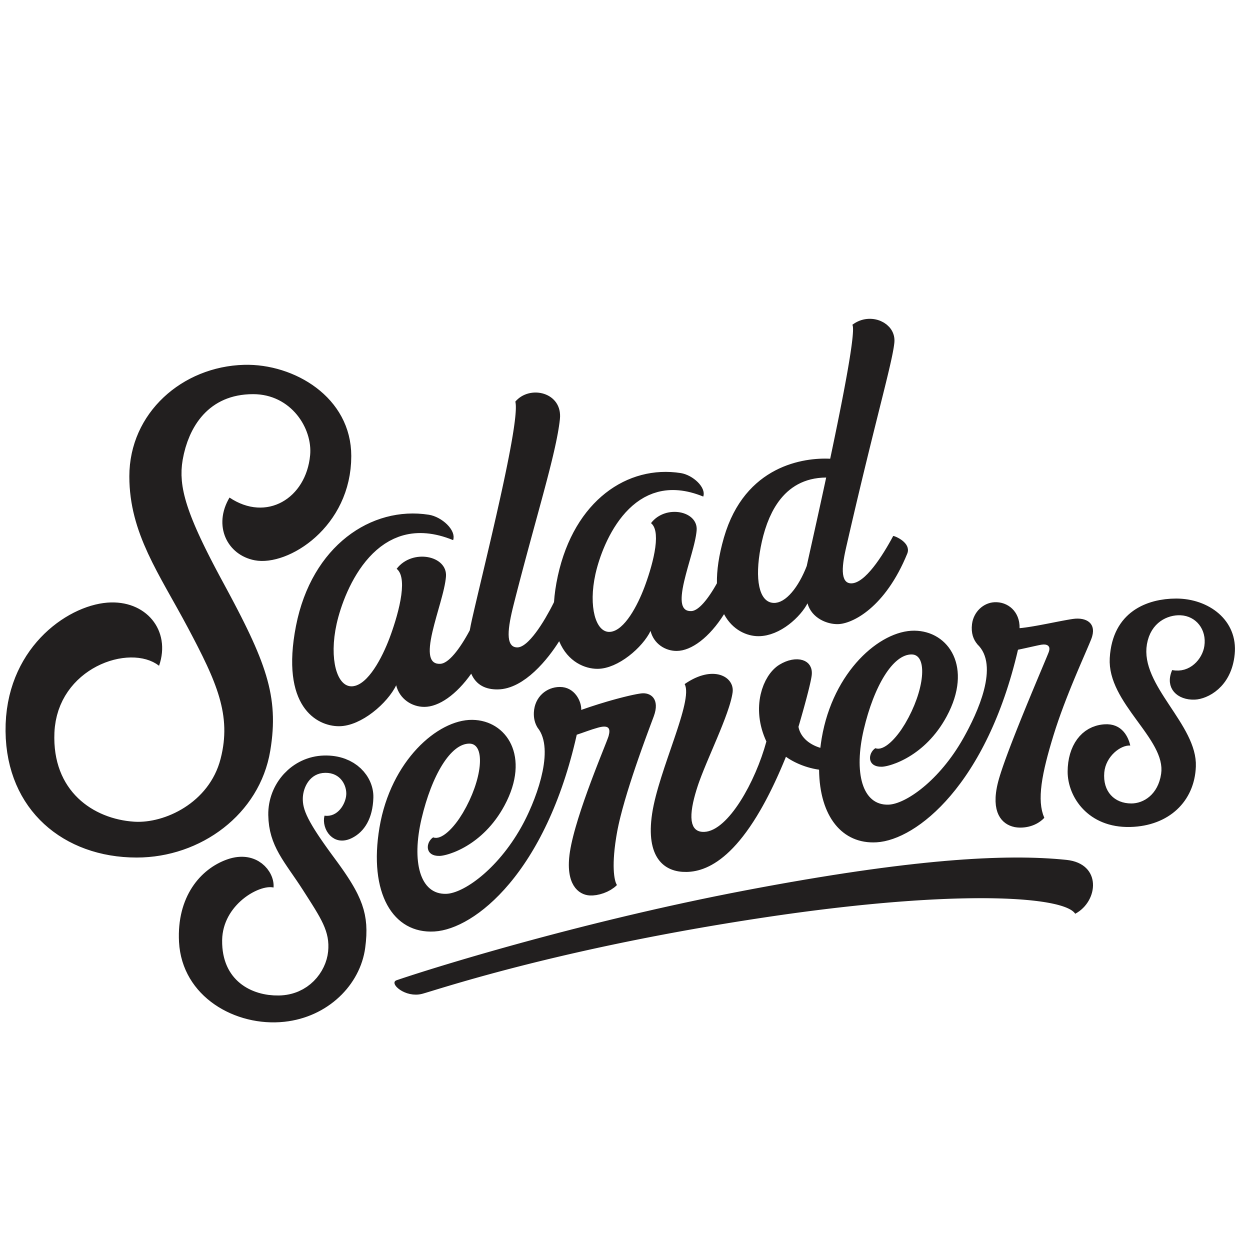 Salad-Servers-logo-alumni-omp11